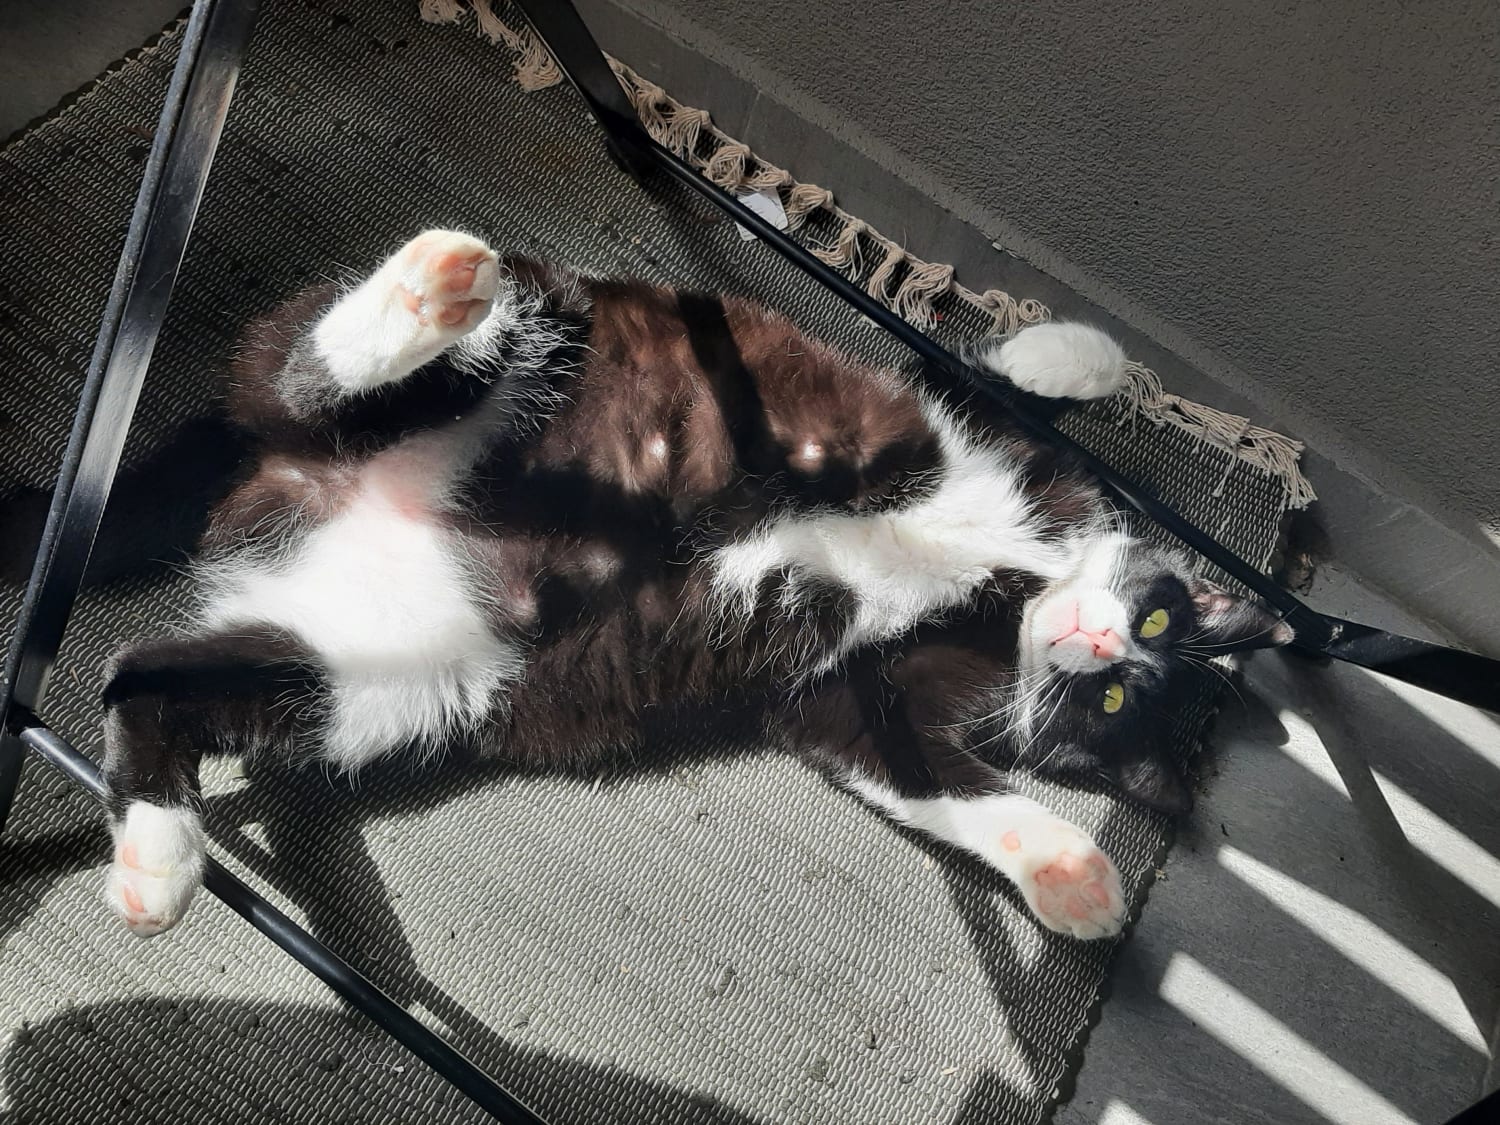 Chonketta caught sunbathing